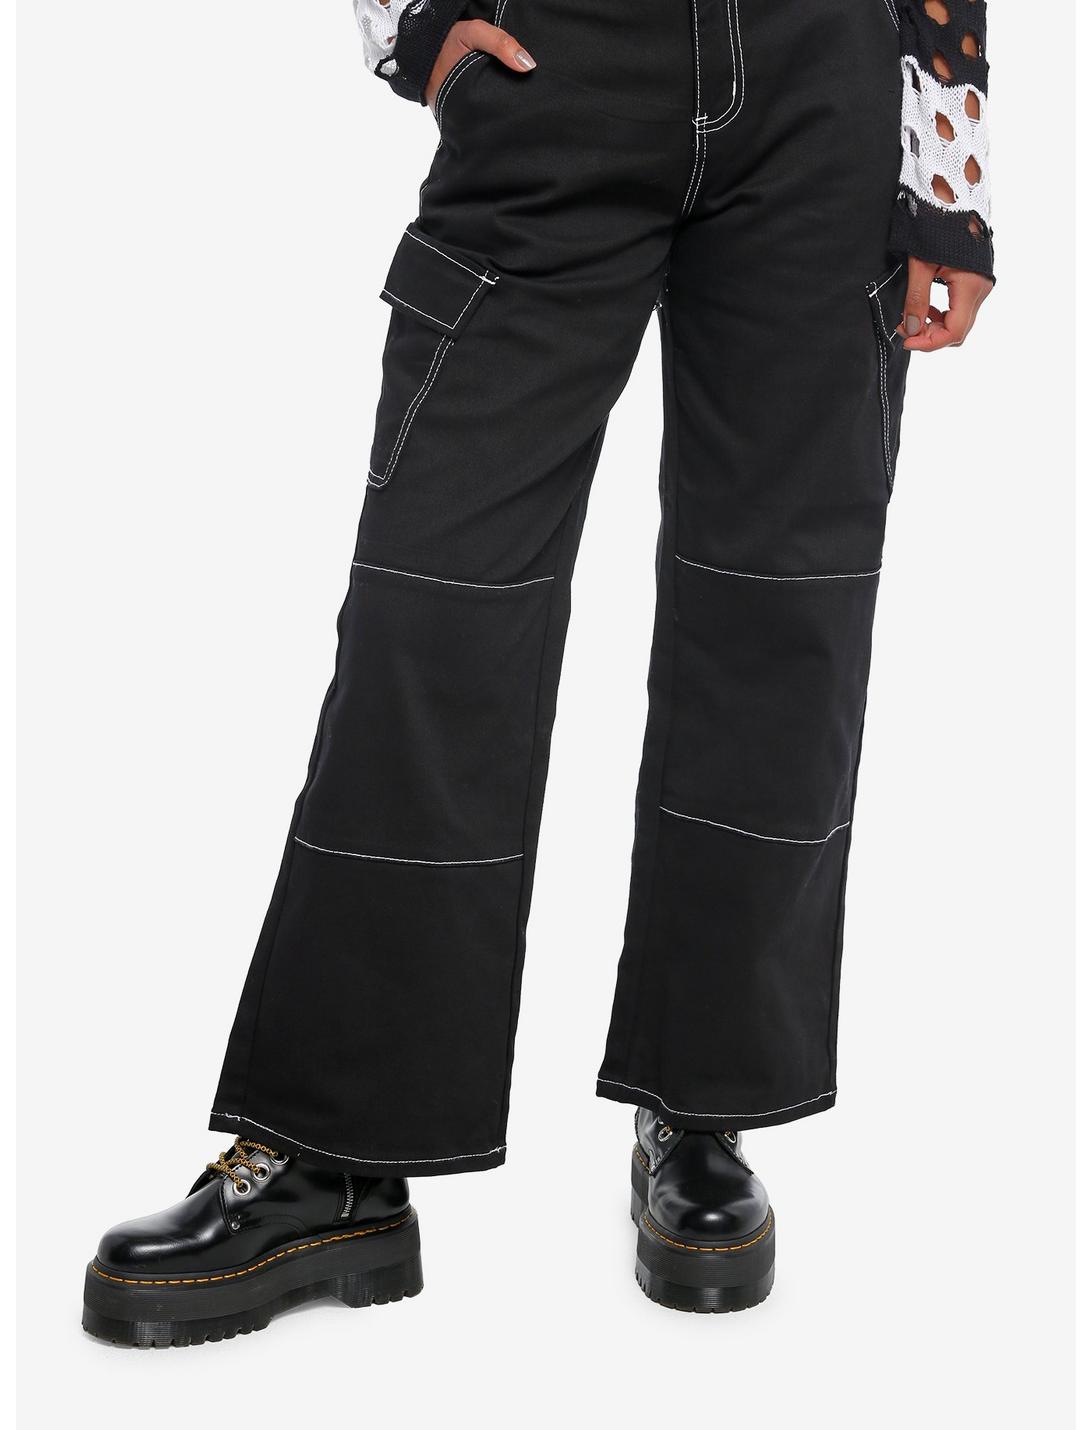 Black & White Contrast Stitch Cargo Pants, BLACK, hi-res